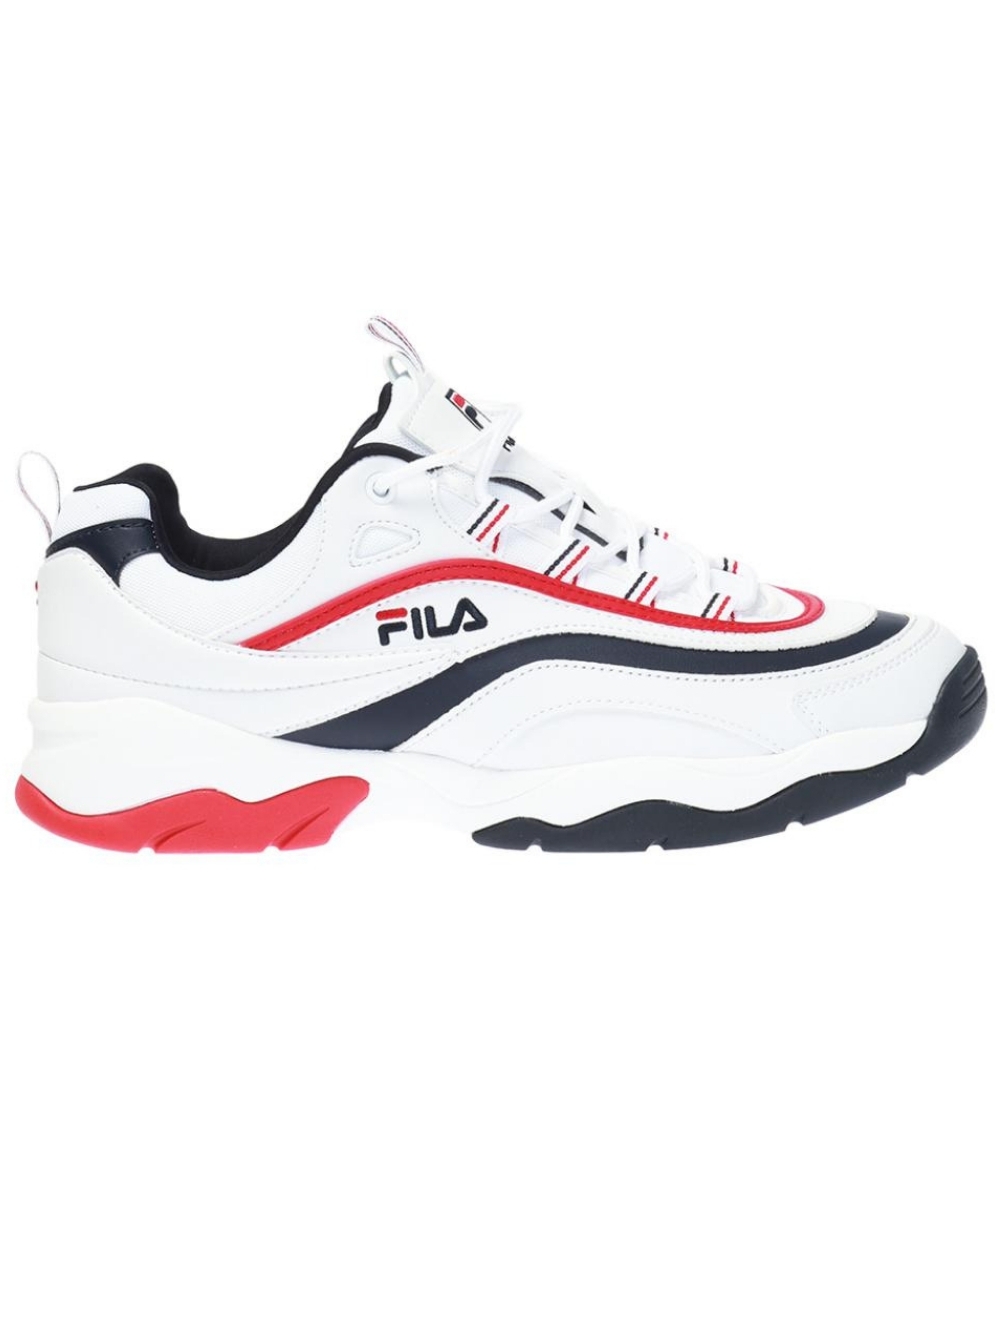 FILA Sneaker Ray F Low White/Fila navy - €29.99